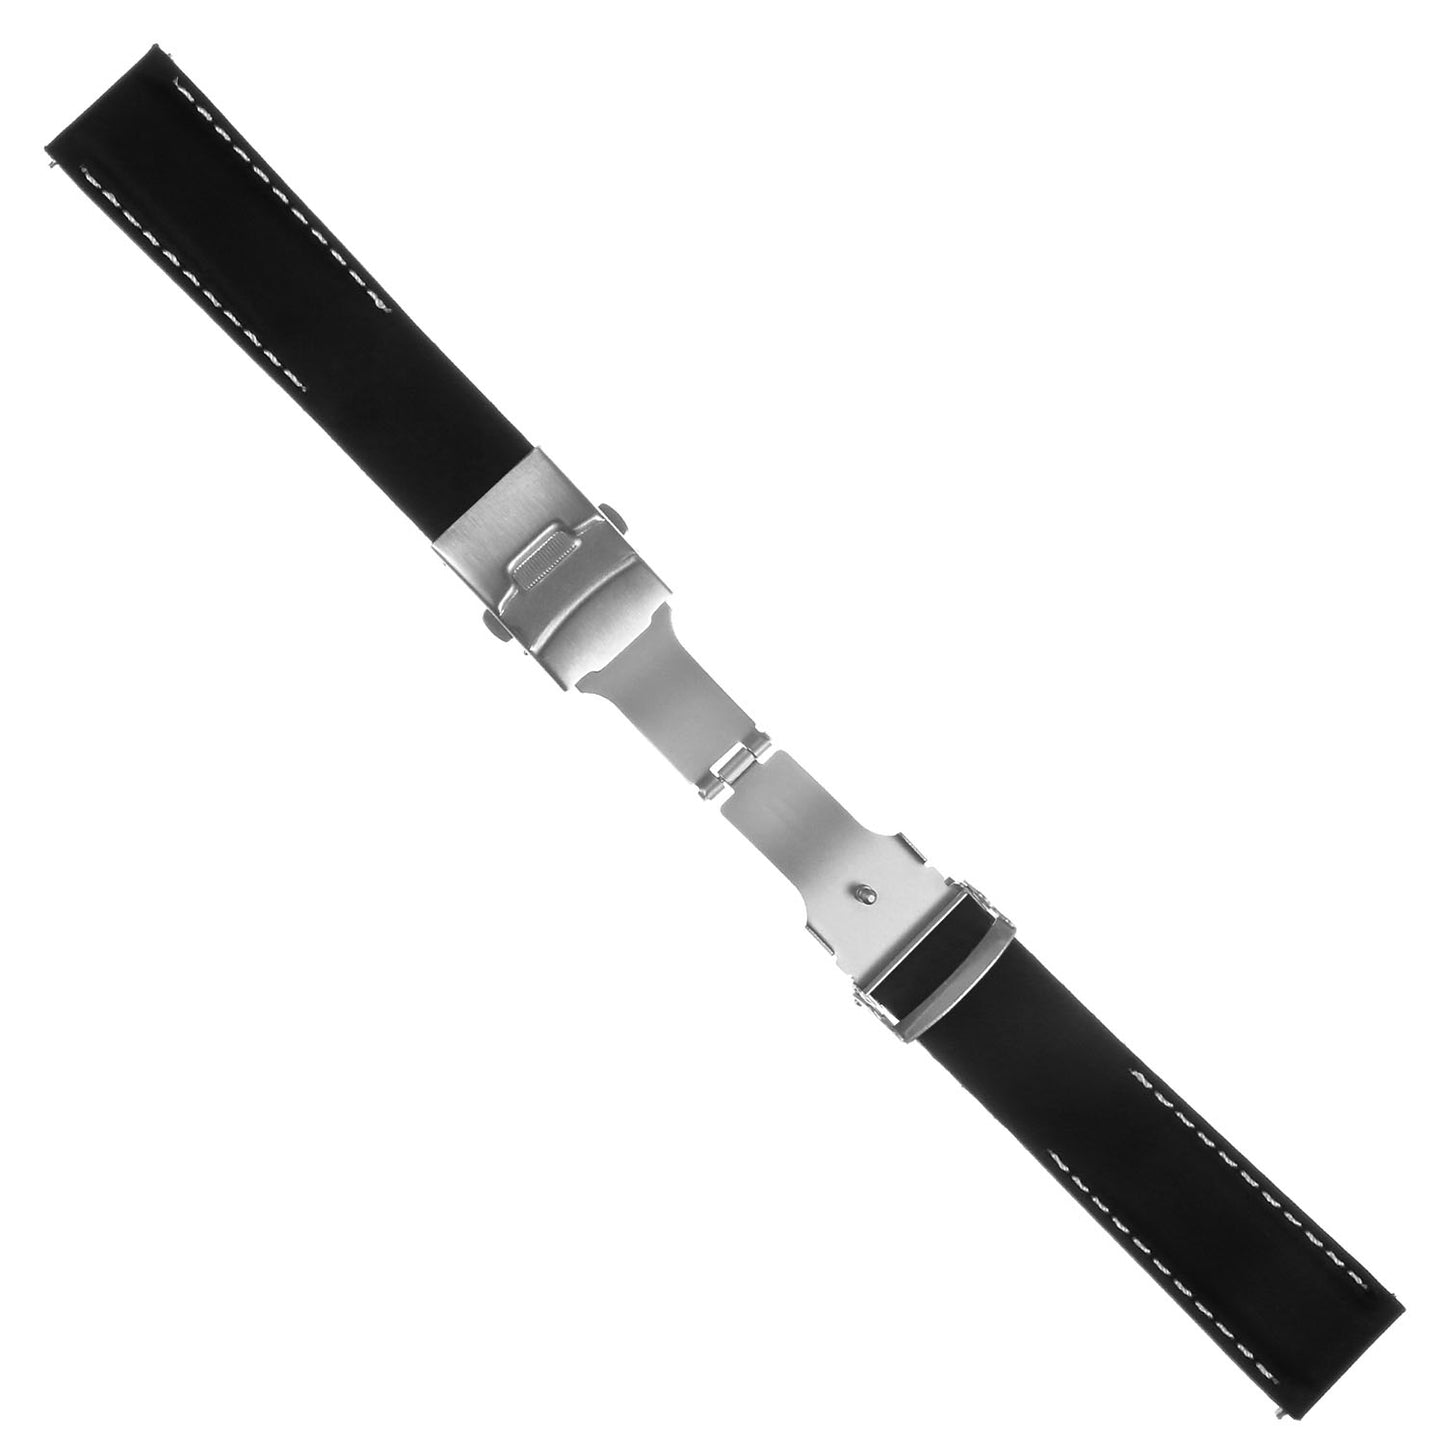 Rubber Strap w/ Stitching & Clasp for Samsung Galaxy Watch 3